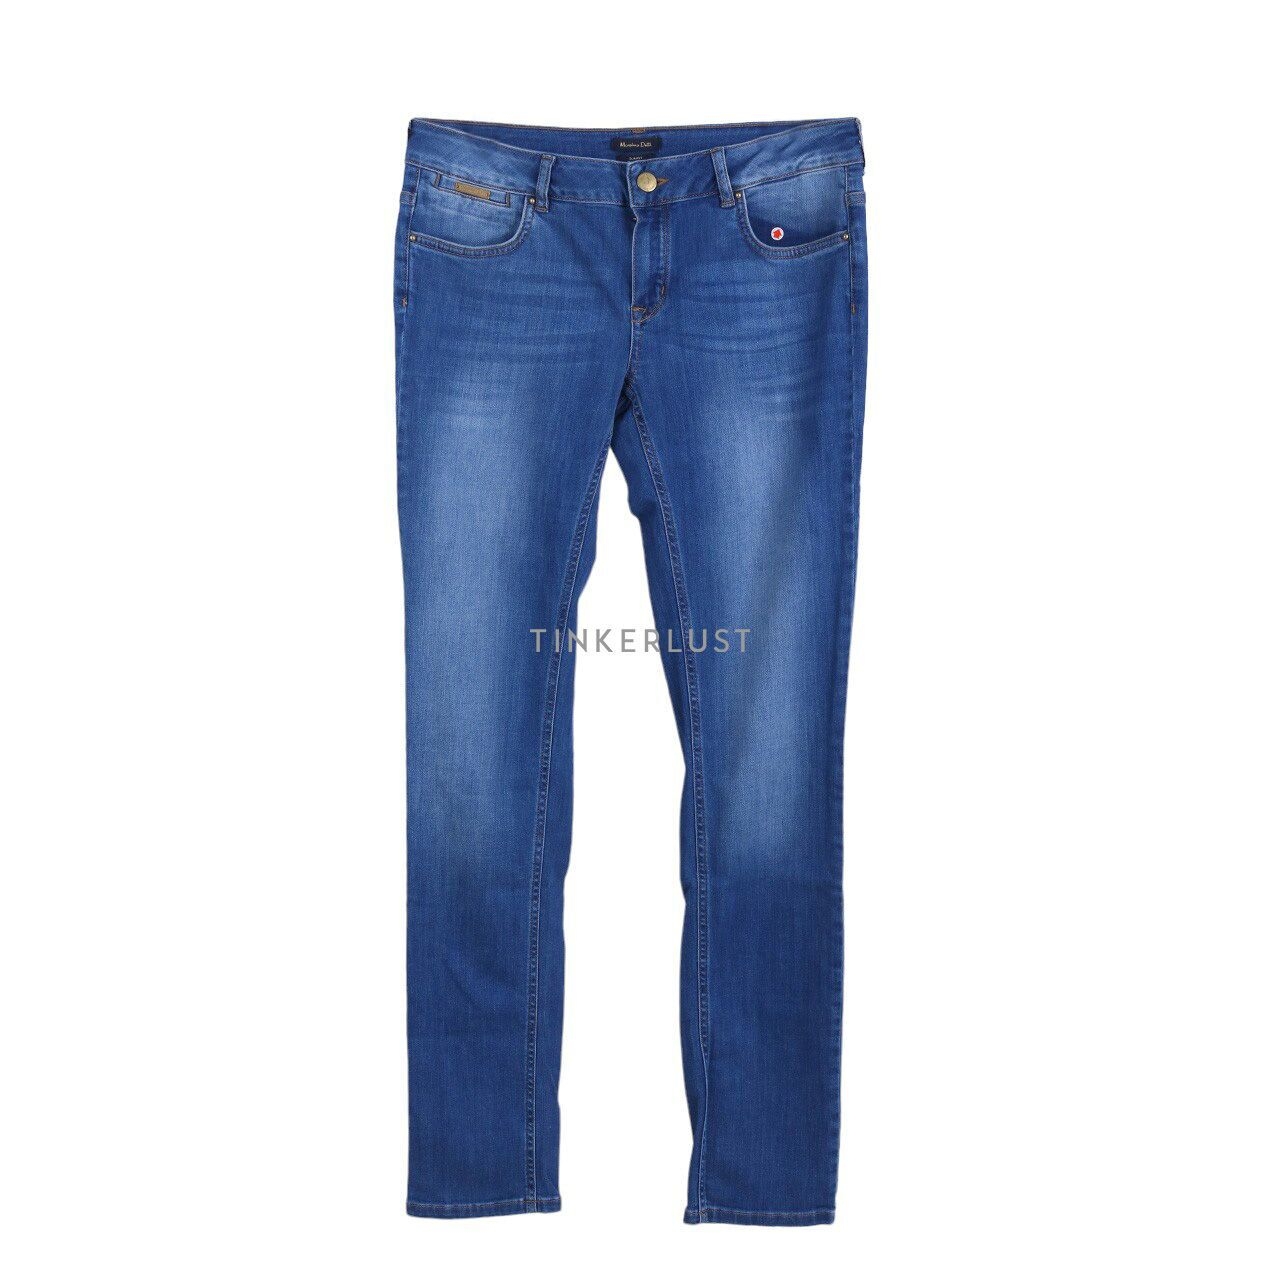 Massimo Dutti Blue Jeans Long Pants